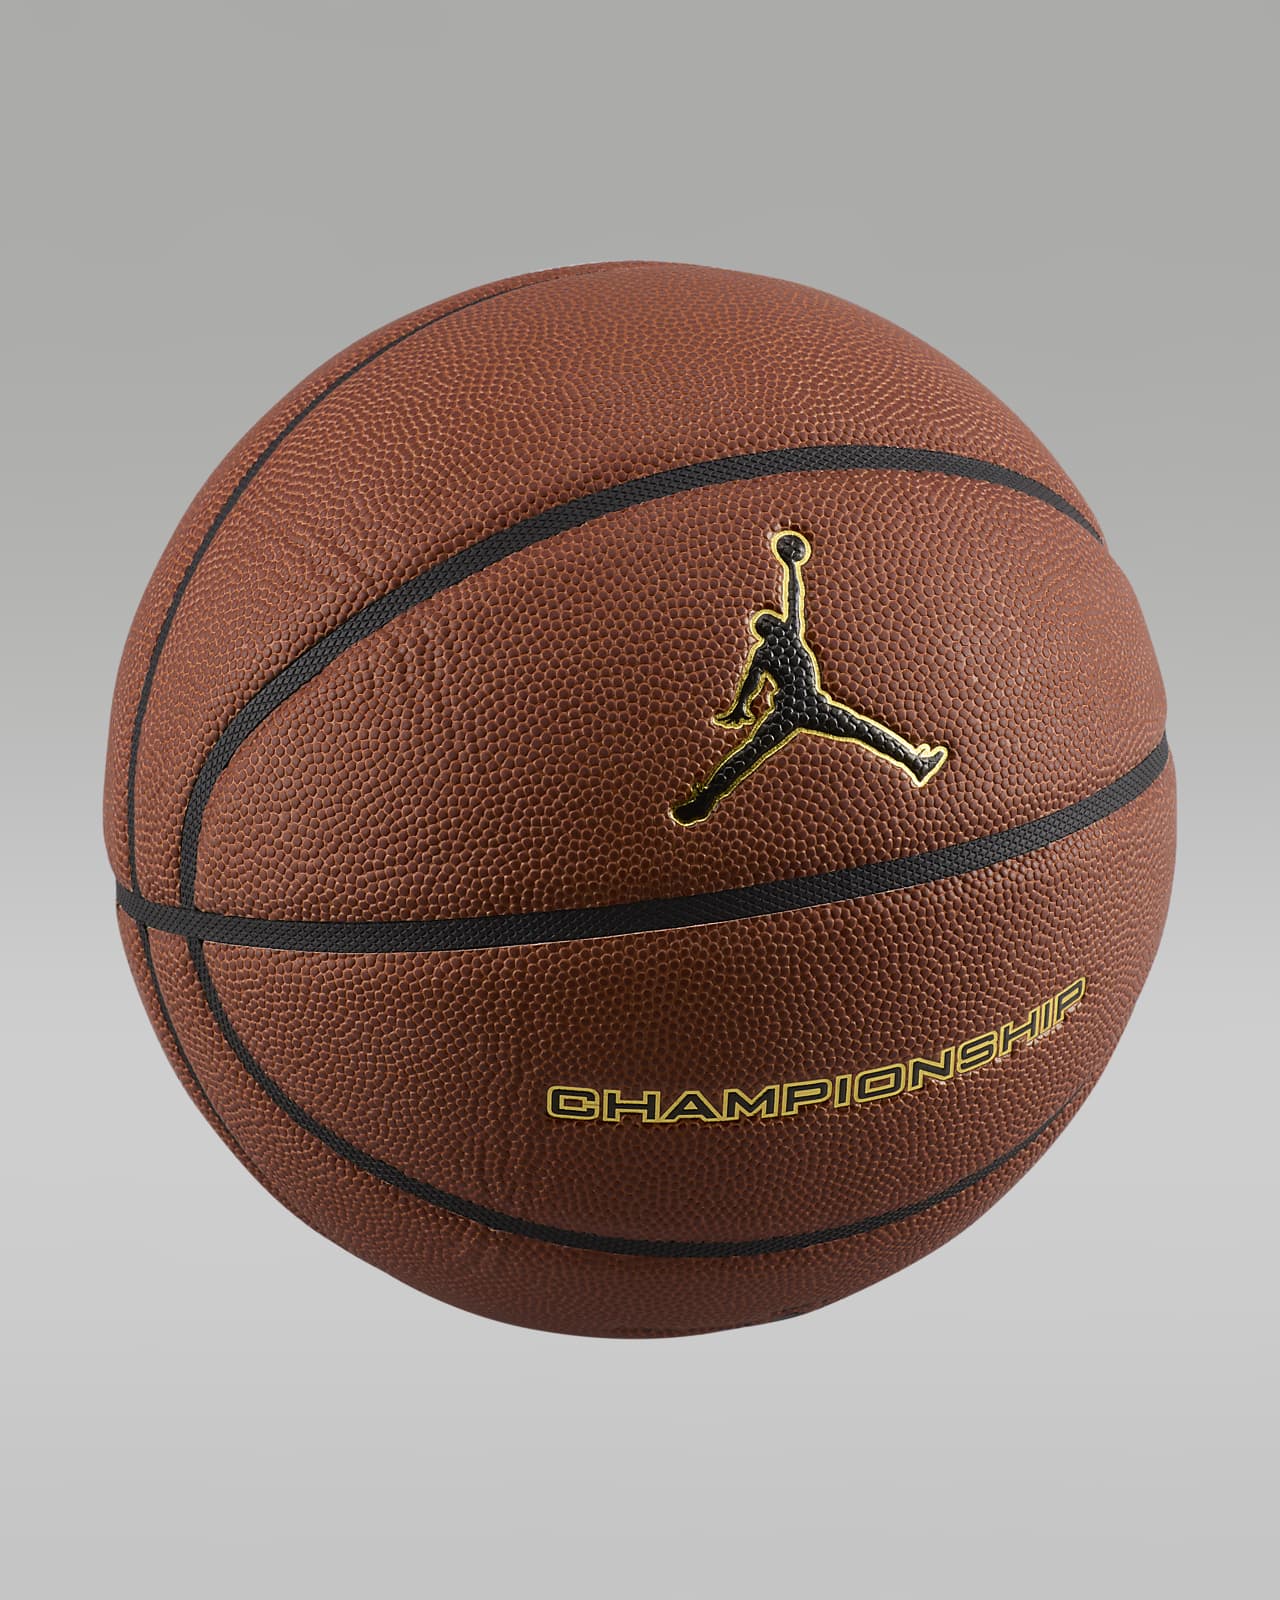 Jordan Basketball (Deflated)